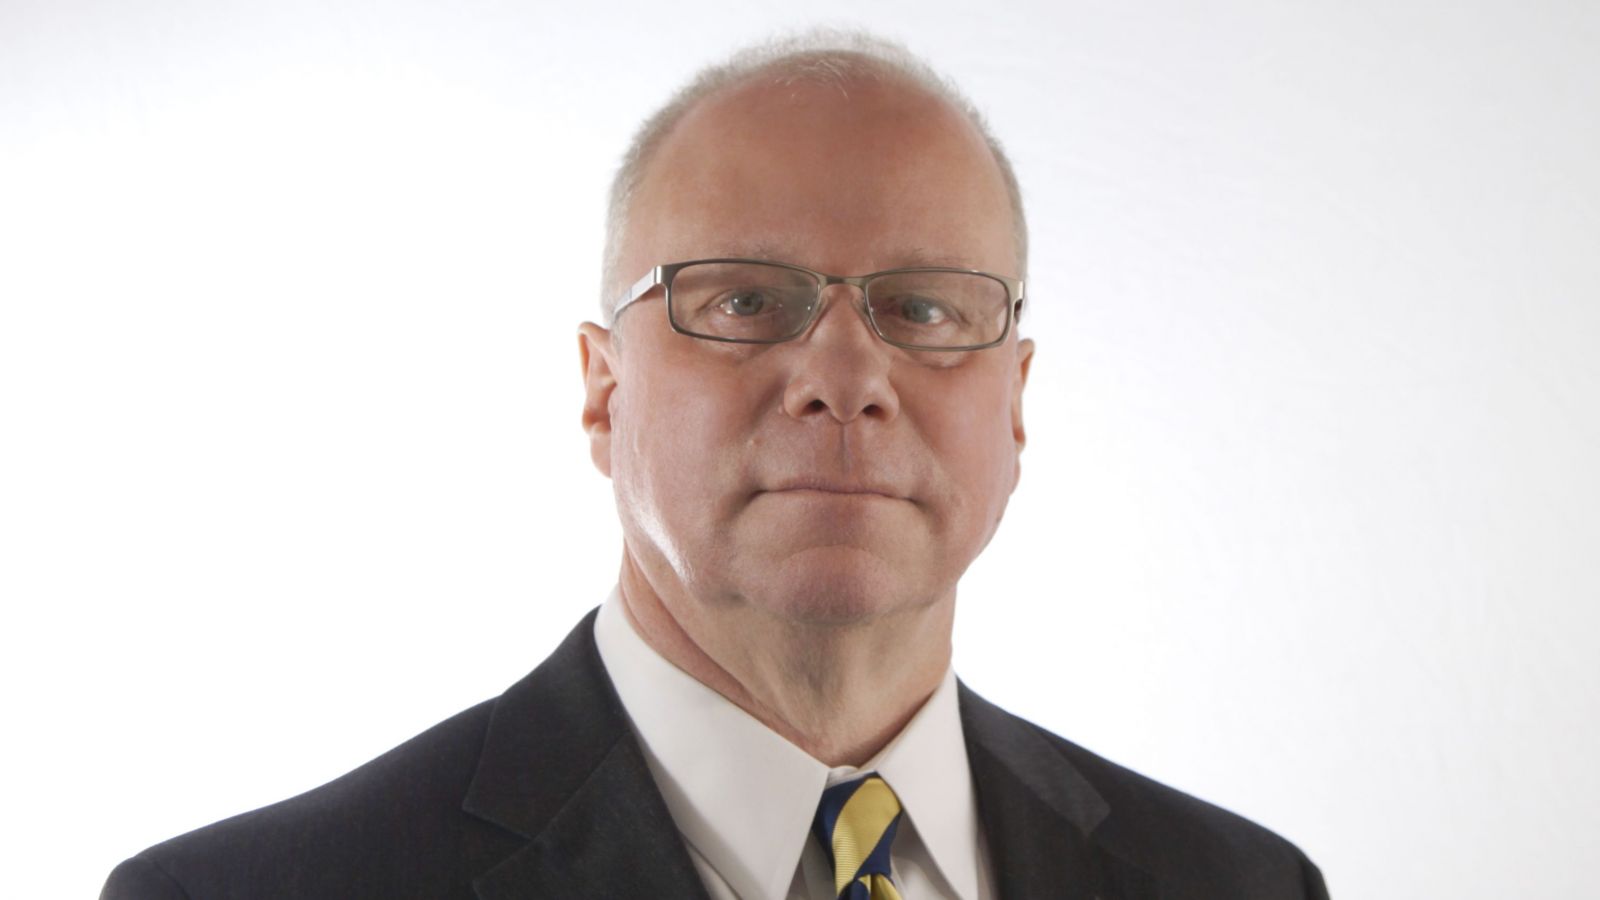 Bart Eckhardt, P.E., President & CEO of Robson Forensic, Inc